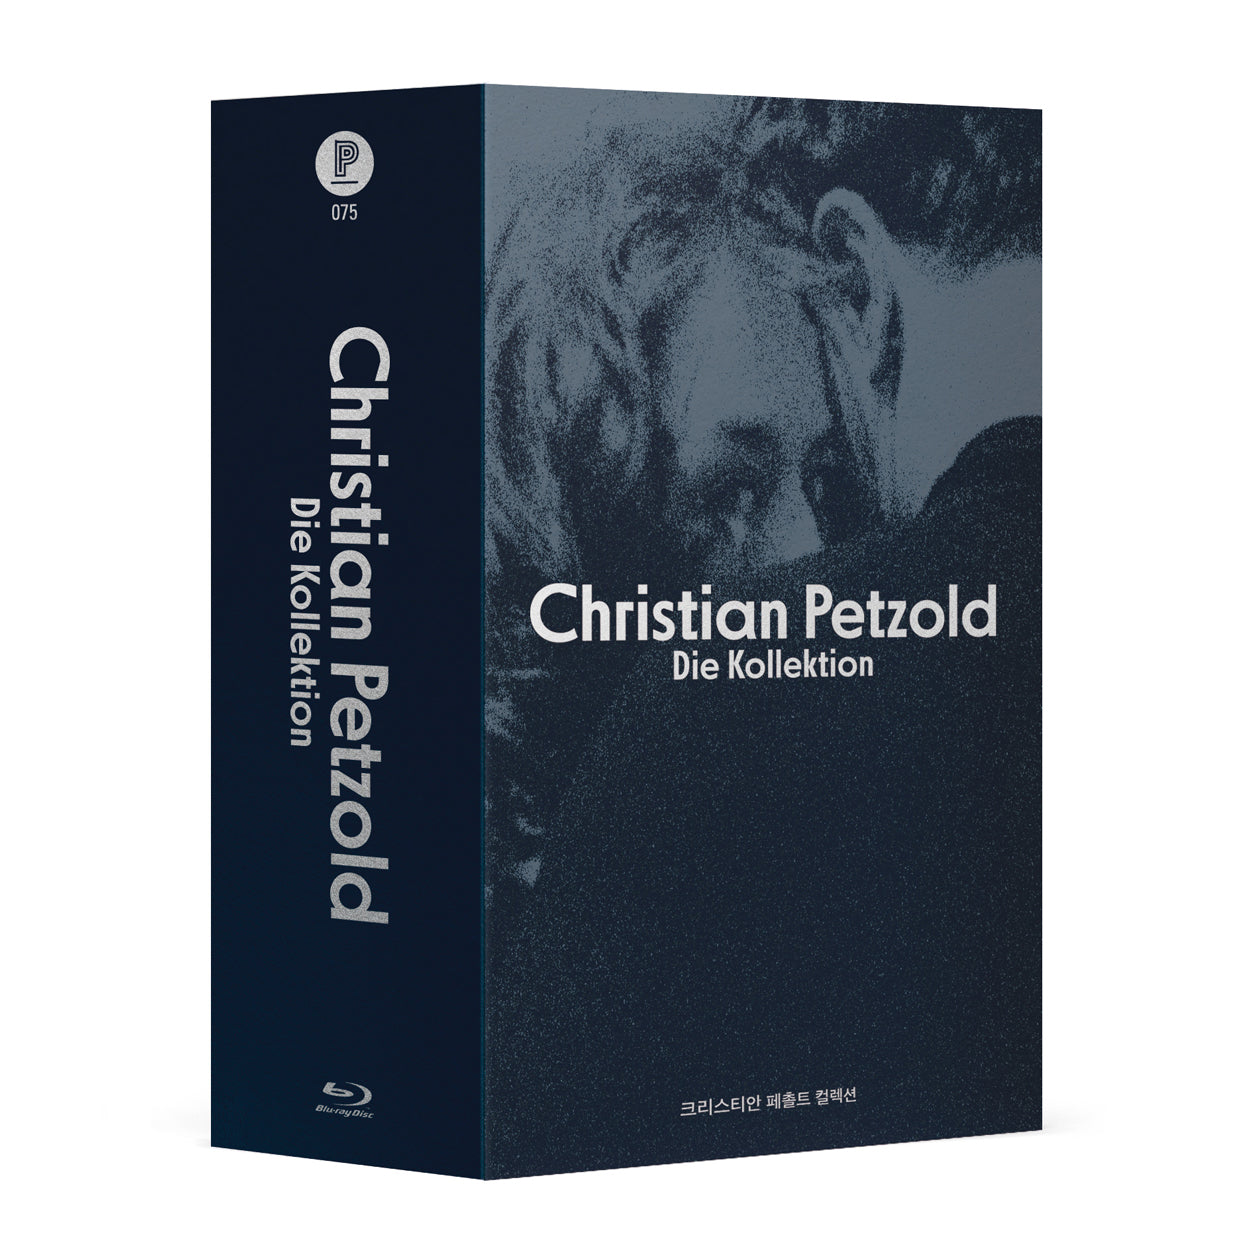 Christian Petzold Collection Blu-ray Boxset (4Discs)